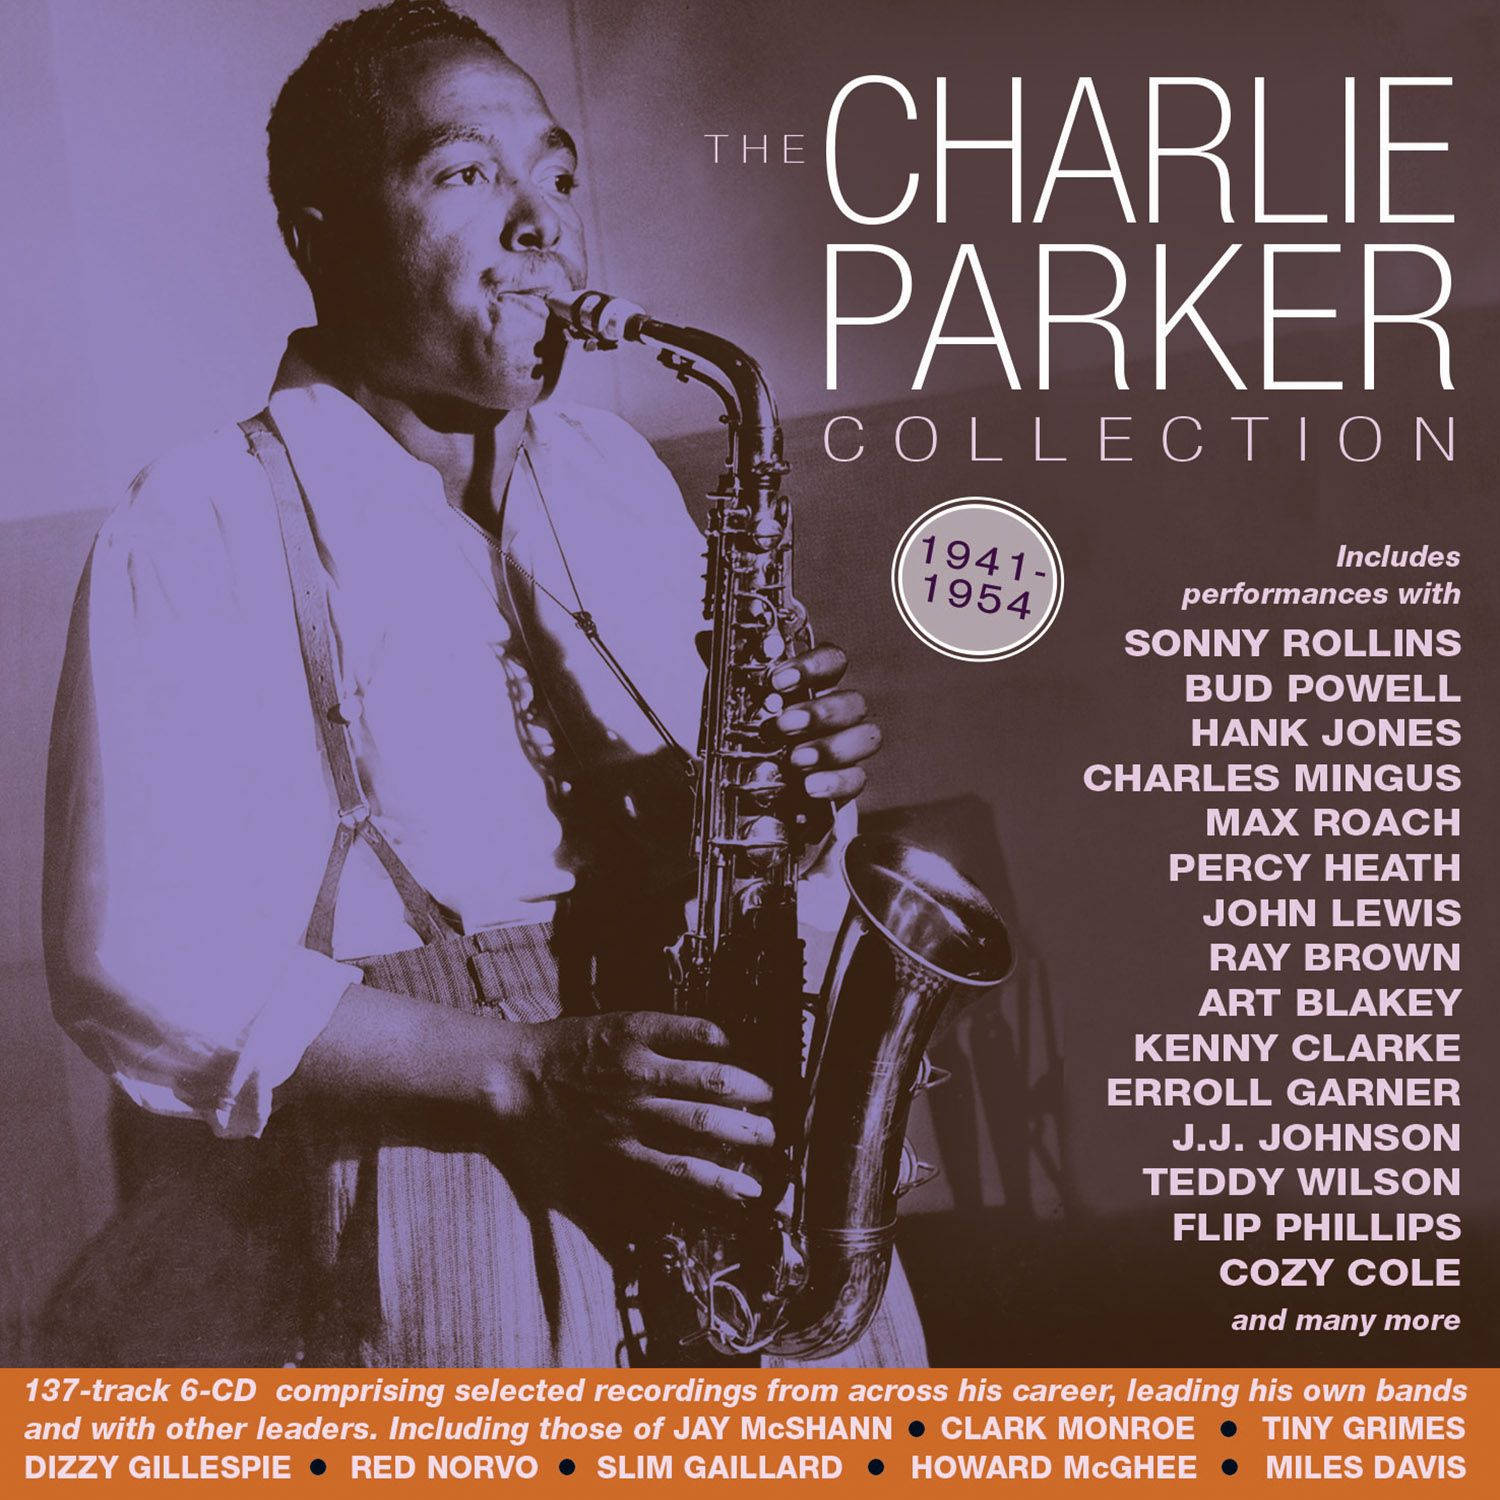 Charlie Parker Album Collection Cover Wallpaper